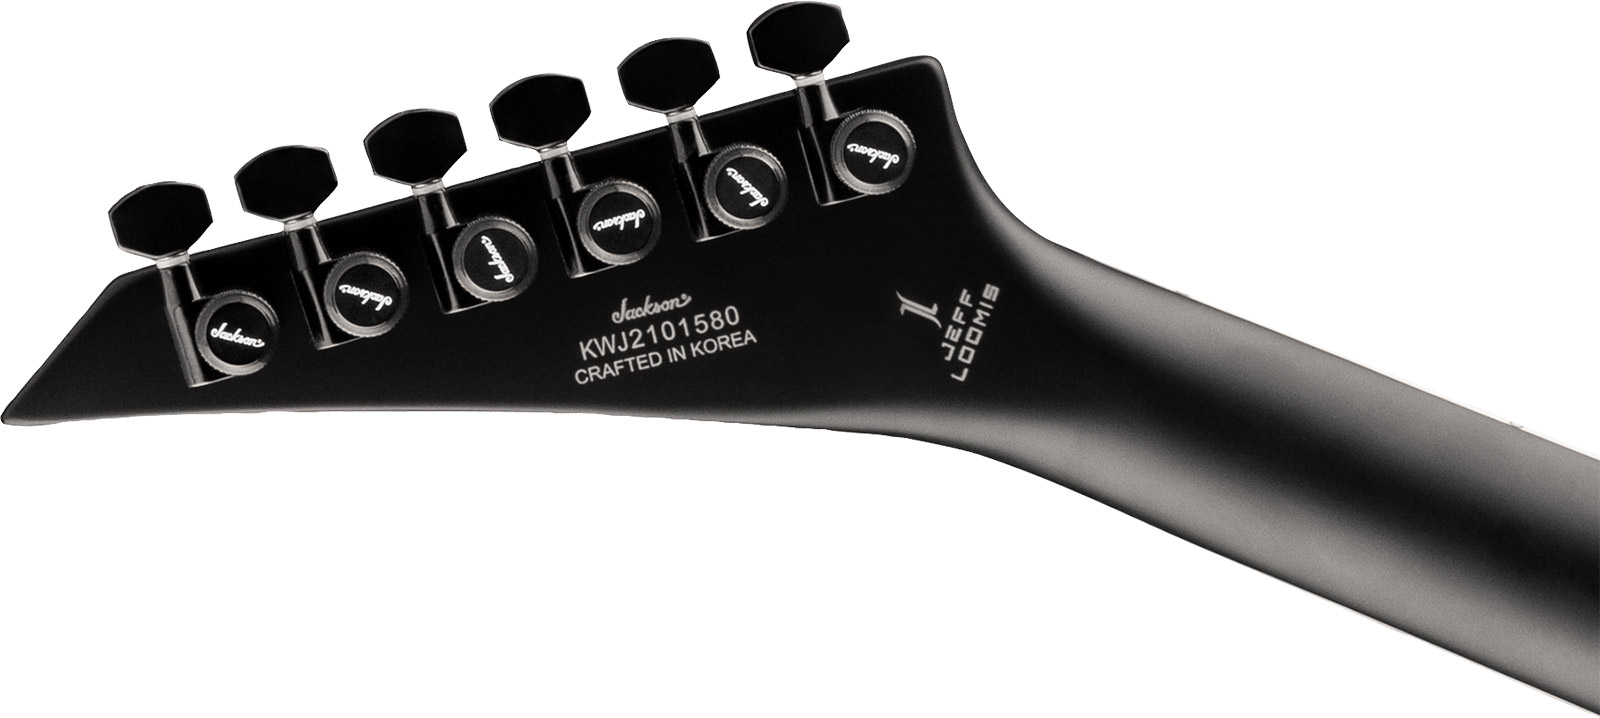 Jackson Jeff Loomis Kelly Ht6 Ash Pro Ltd Signature 2h Seymour Duncan Ht Eb - Black - Guitarra electrica metalica - Variation 3